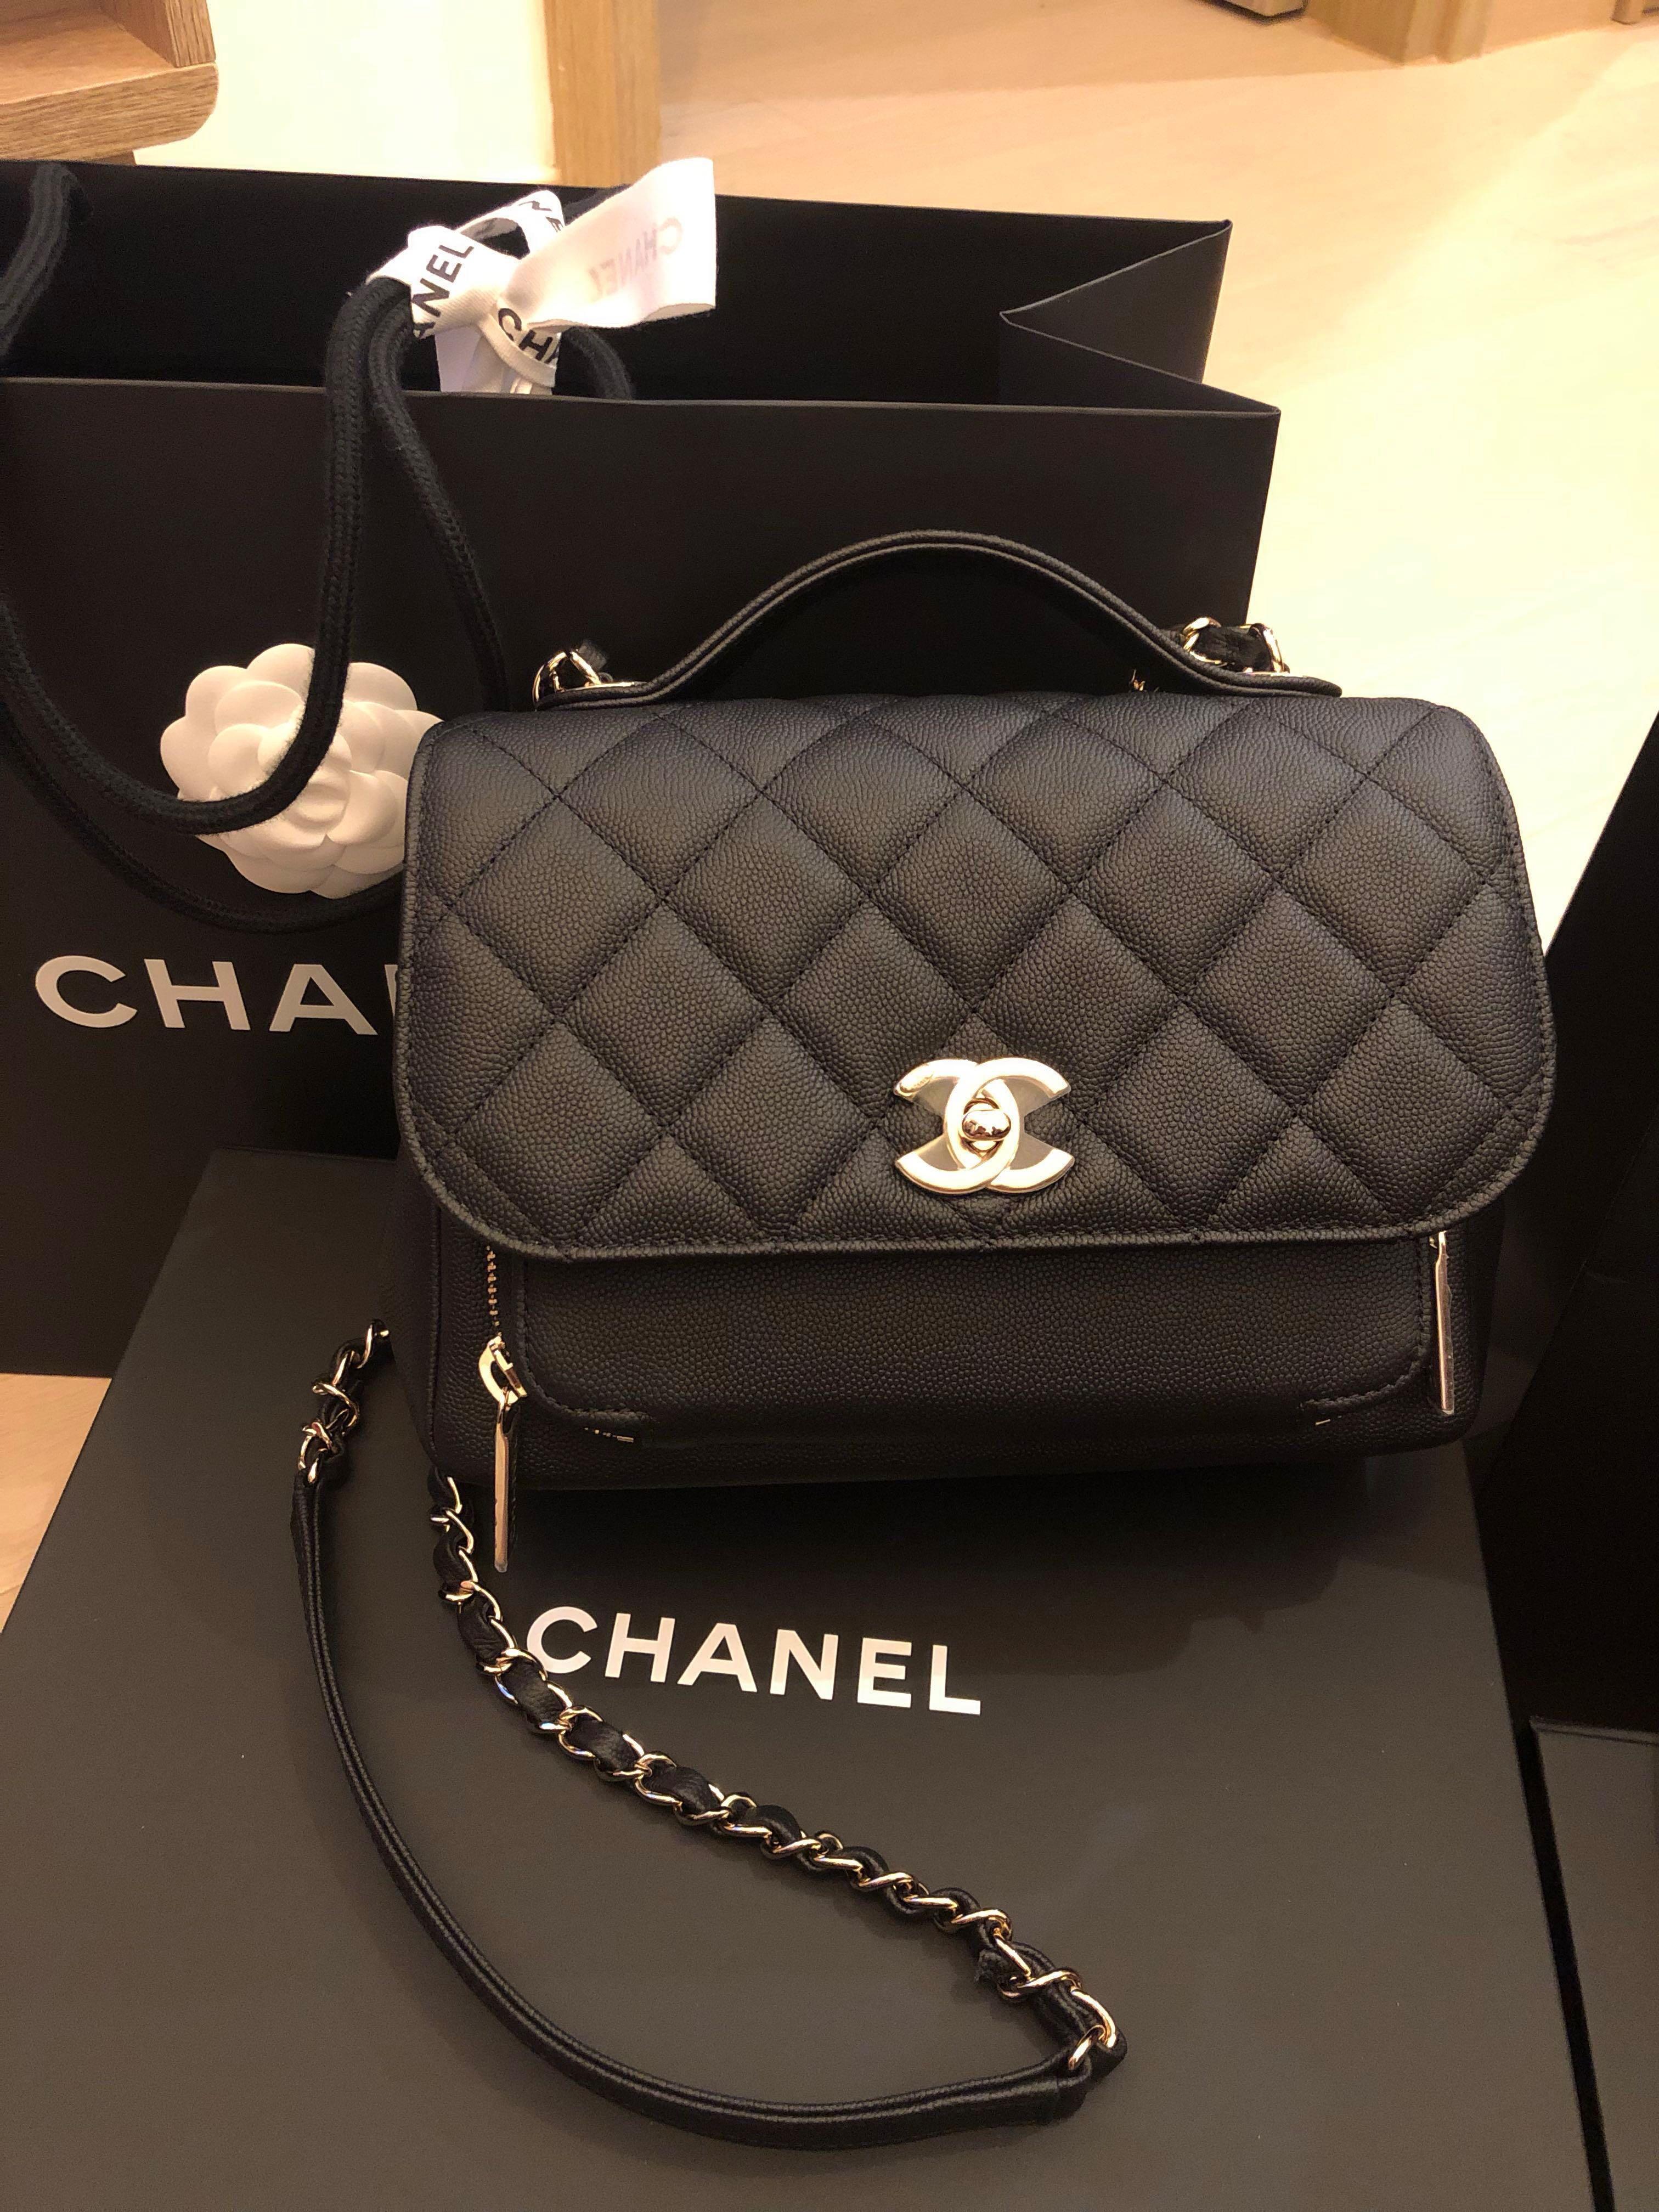 Chanel Affinity Medium Size Factory Sale, SAVE 51%.